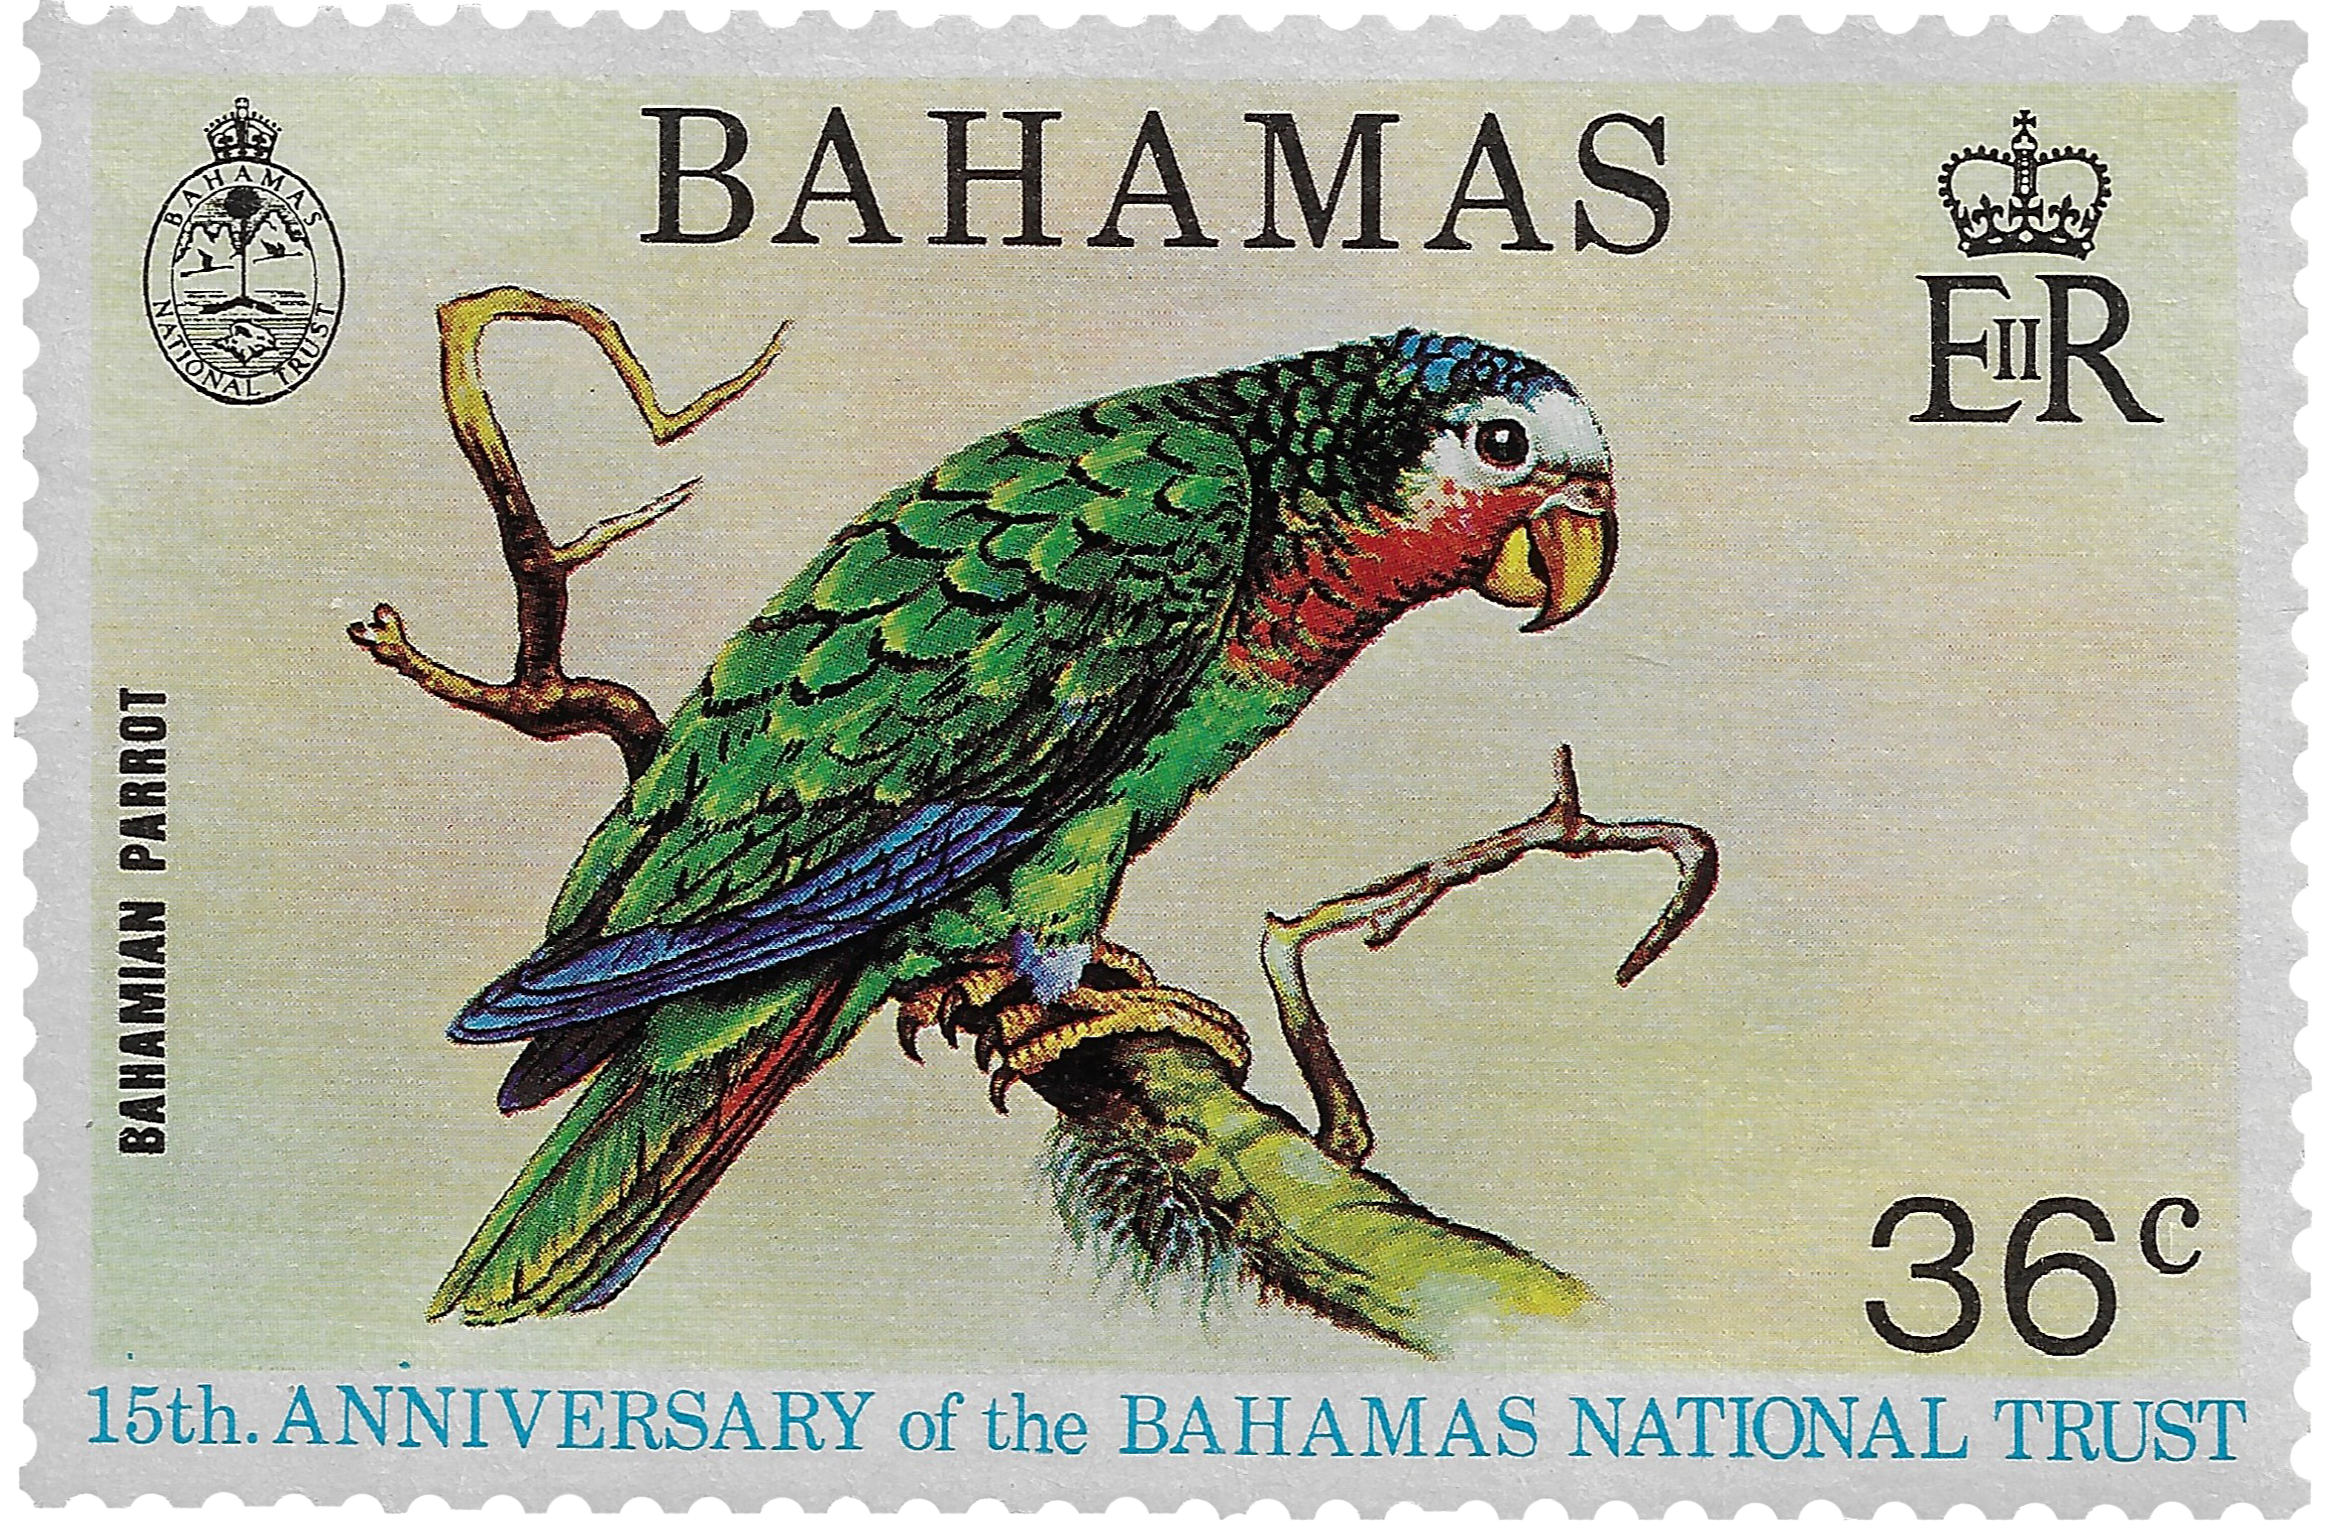 36c 1974, Bahamian Parrot, 15th Anniversary of the Bahamas National Trust